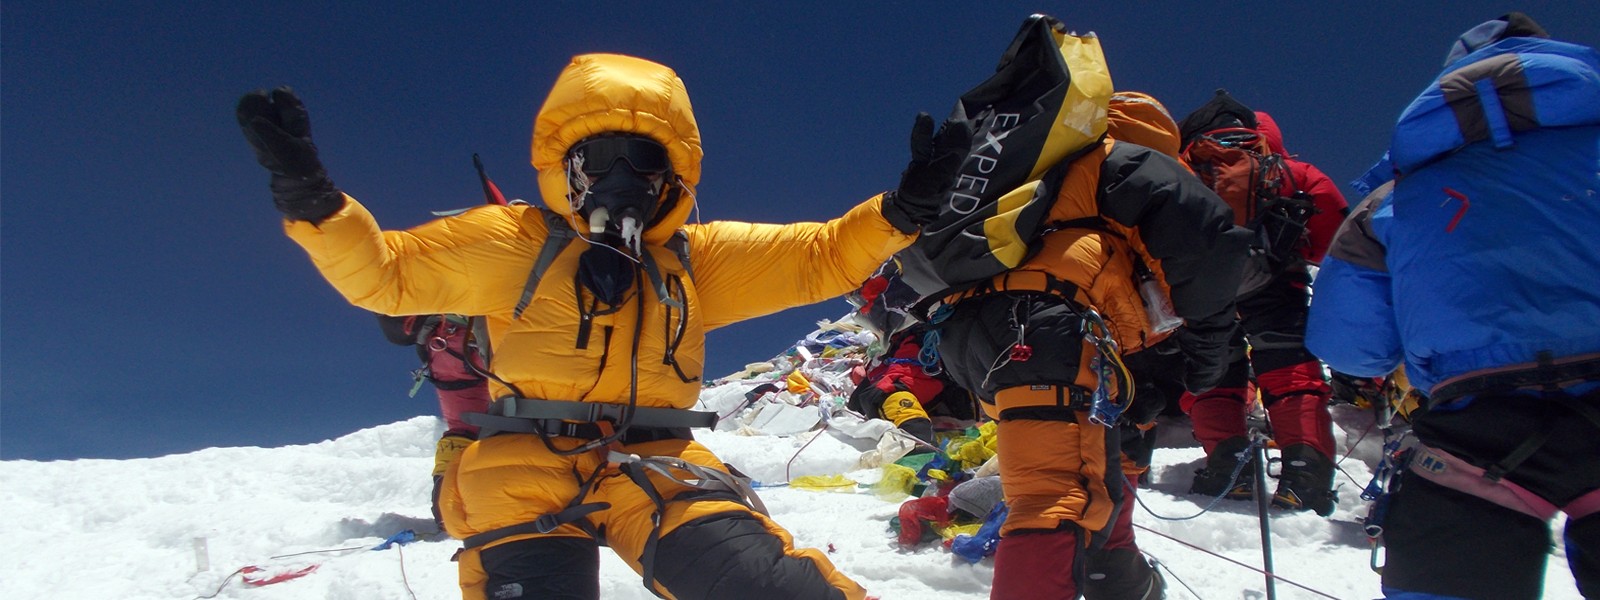 Mt. Everest North Col Summit